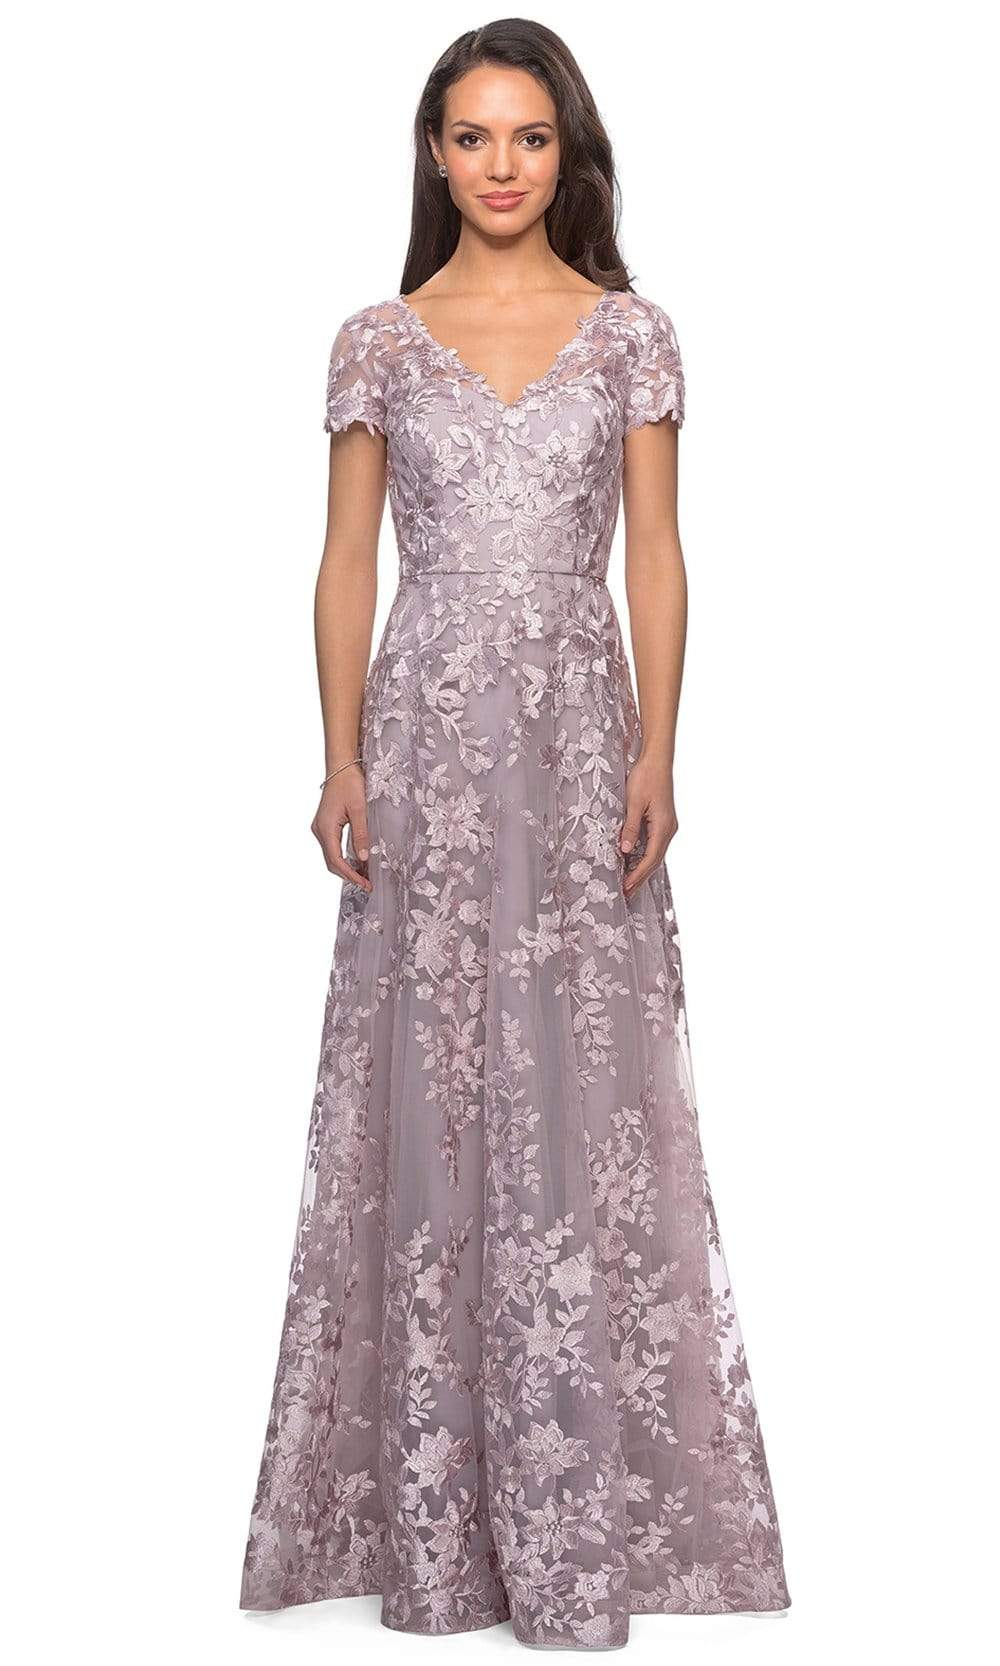 Image of La Femme - 27870 Short Sleeve Lace Overlaid A-Line Dress